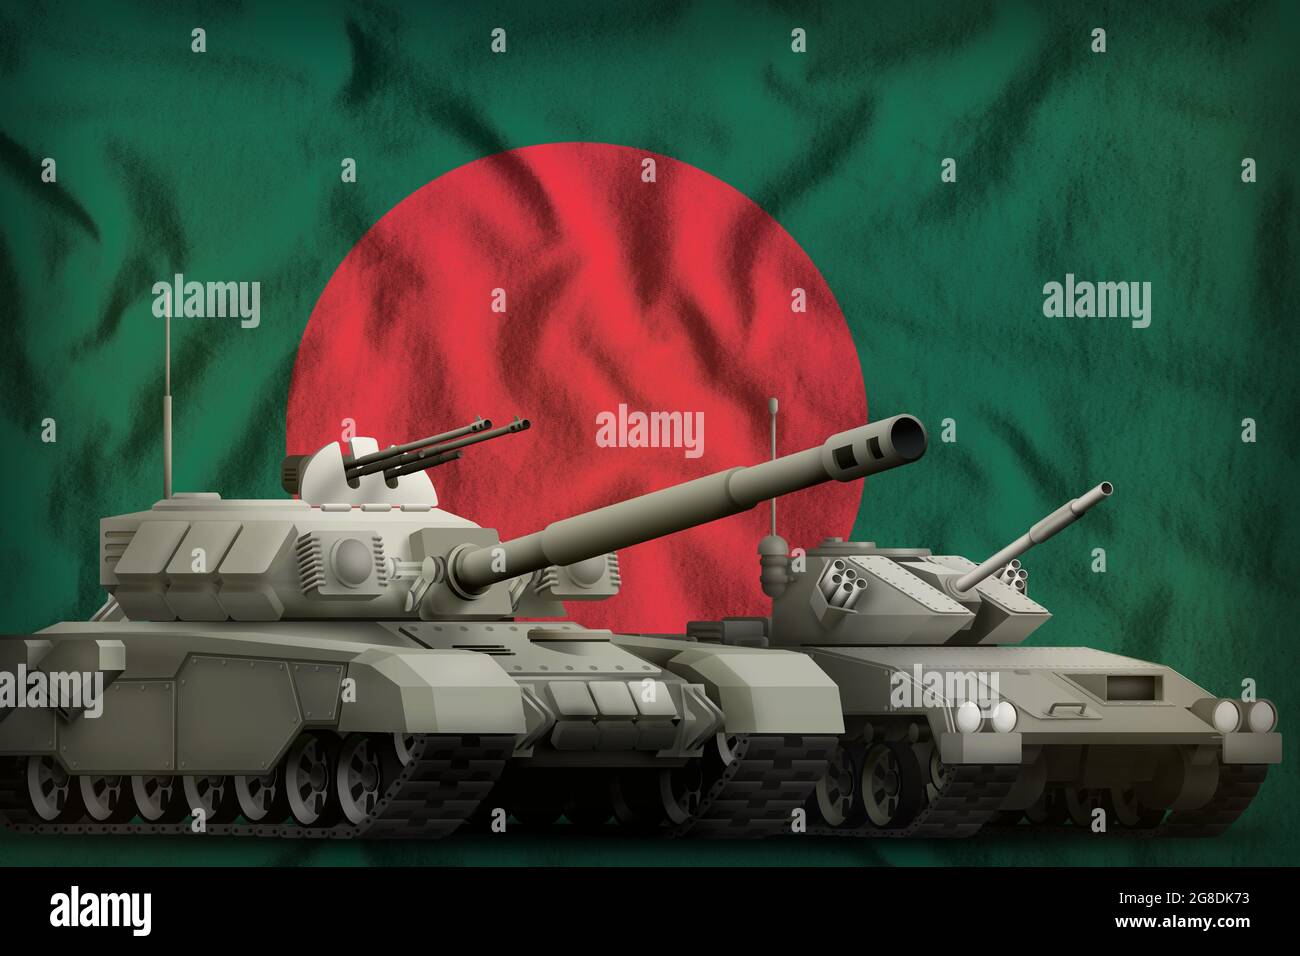 tanks on the Bangladesh flag background. Bangladesh tank forces concept. 3d Illustration Stock Photo